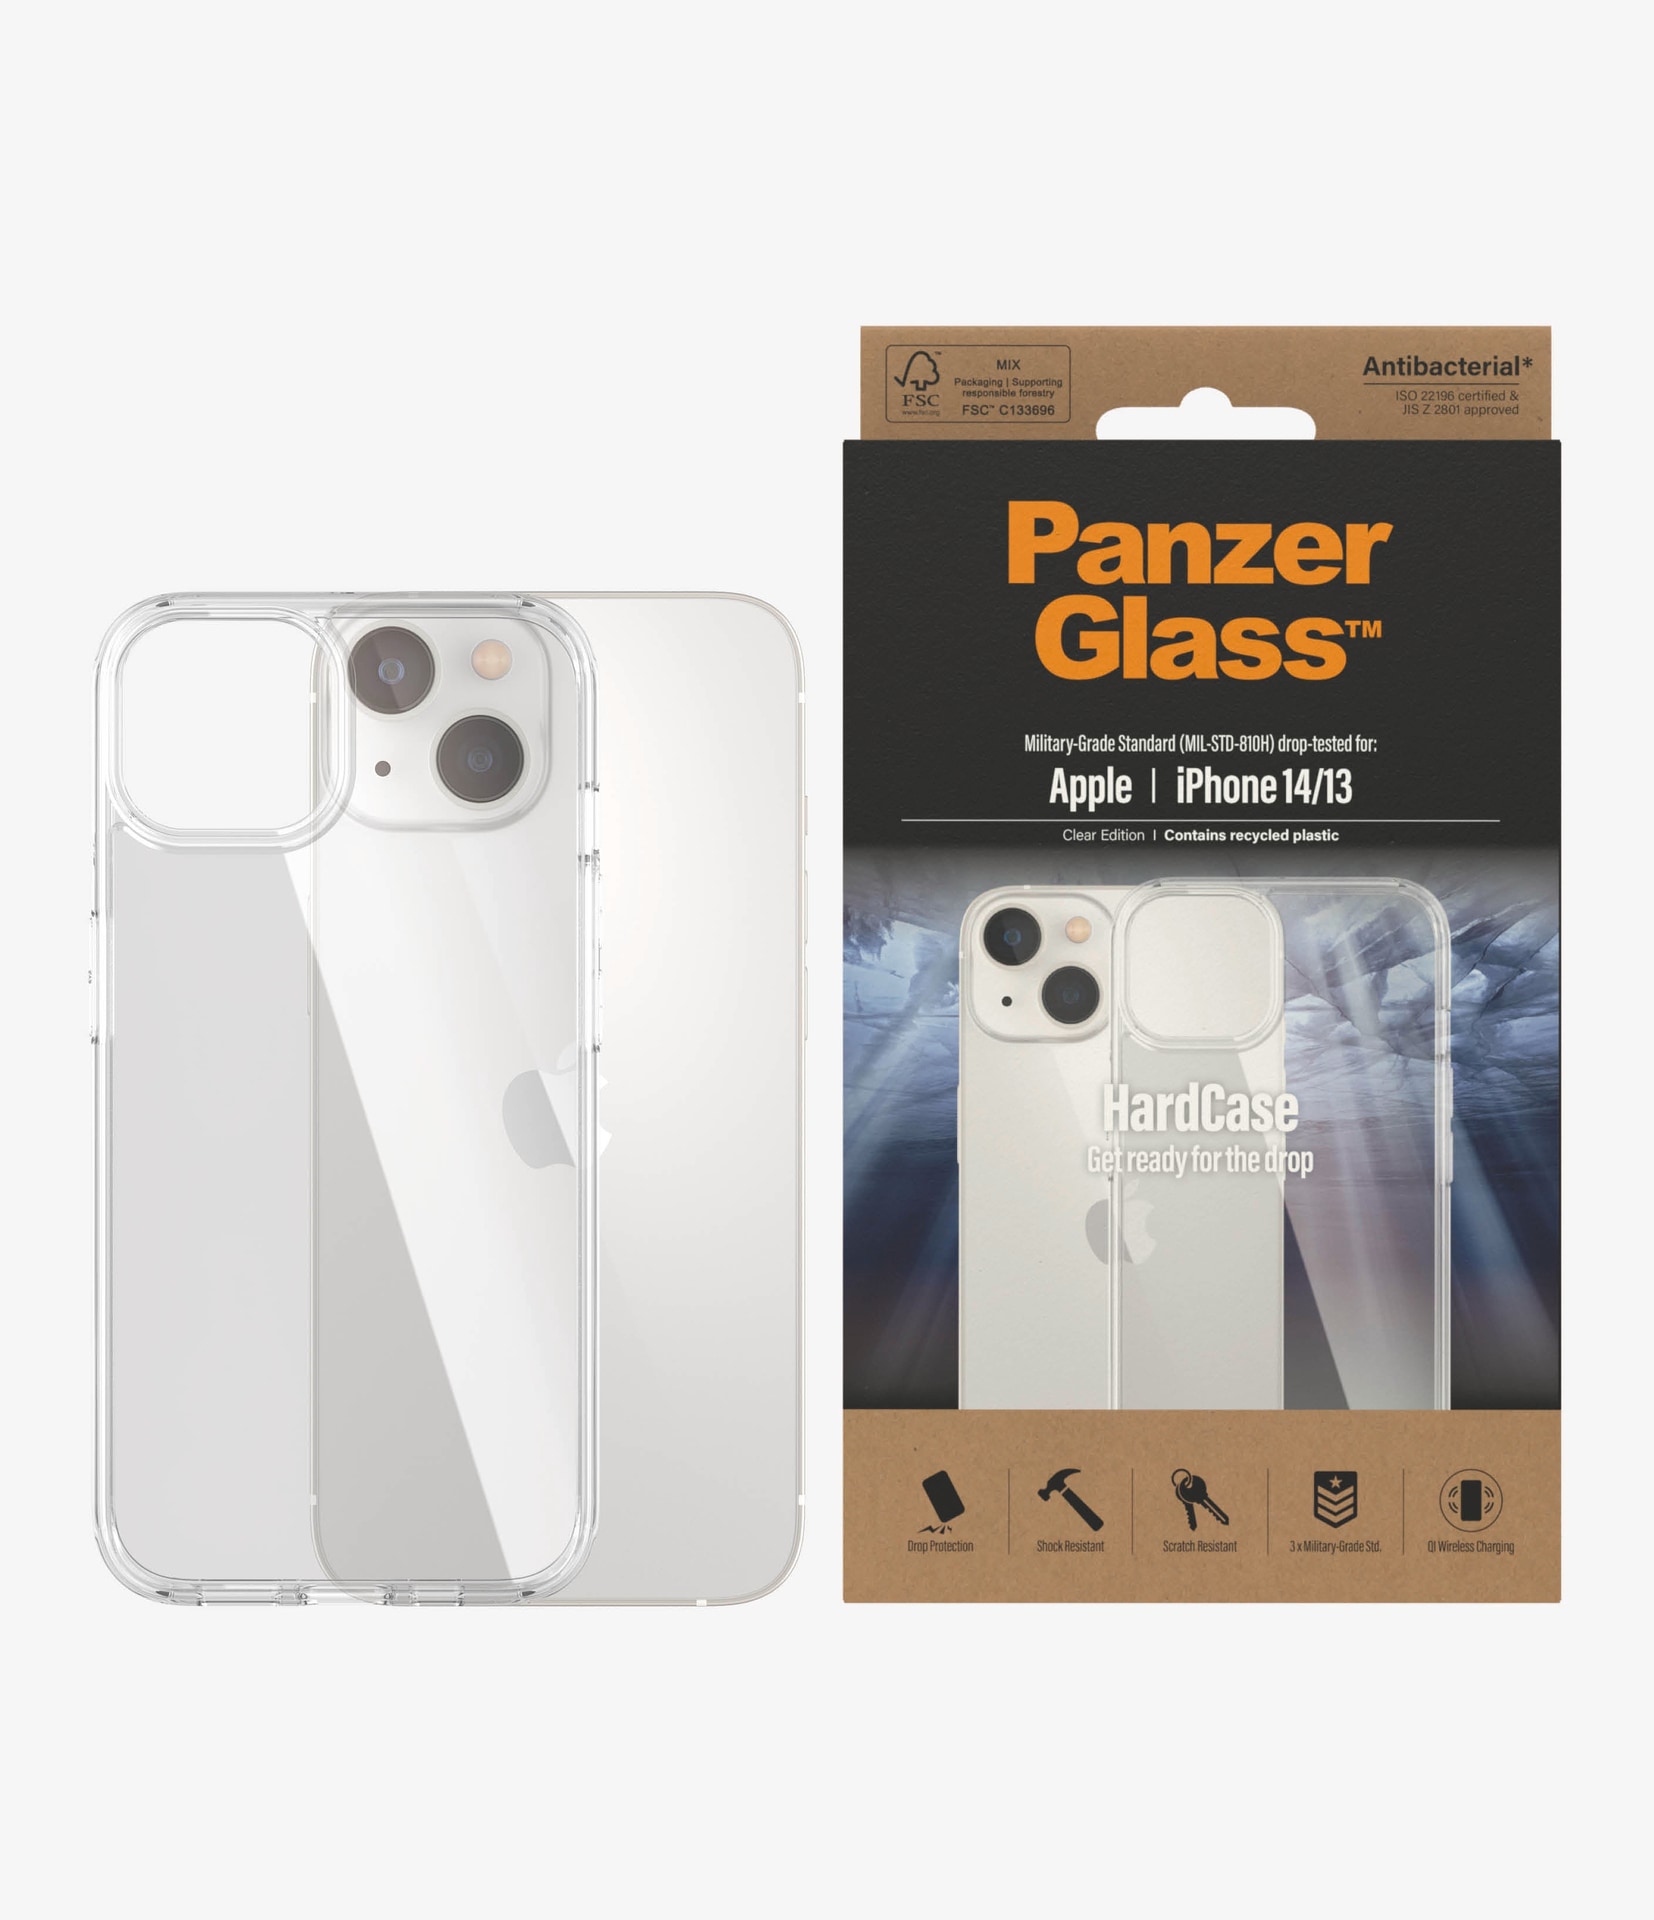 PanzerGlass Backcover »HardCase«, iPhone 14-iPhone 13, für Apple iPhone 13, 14